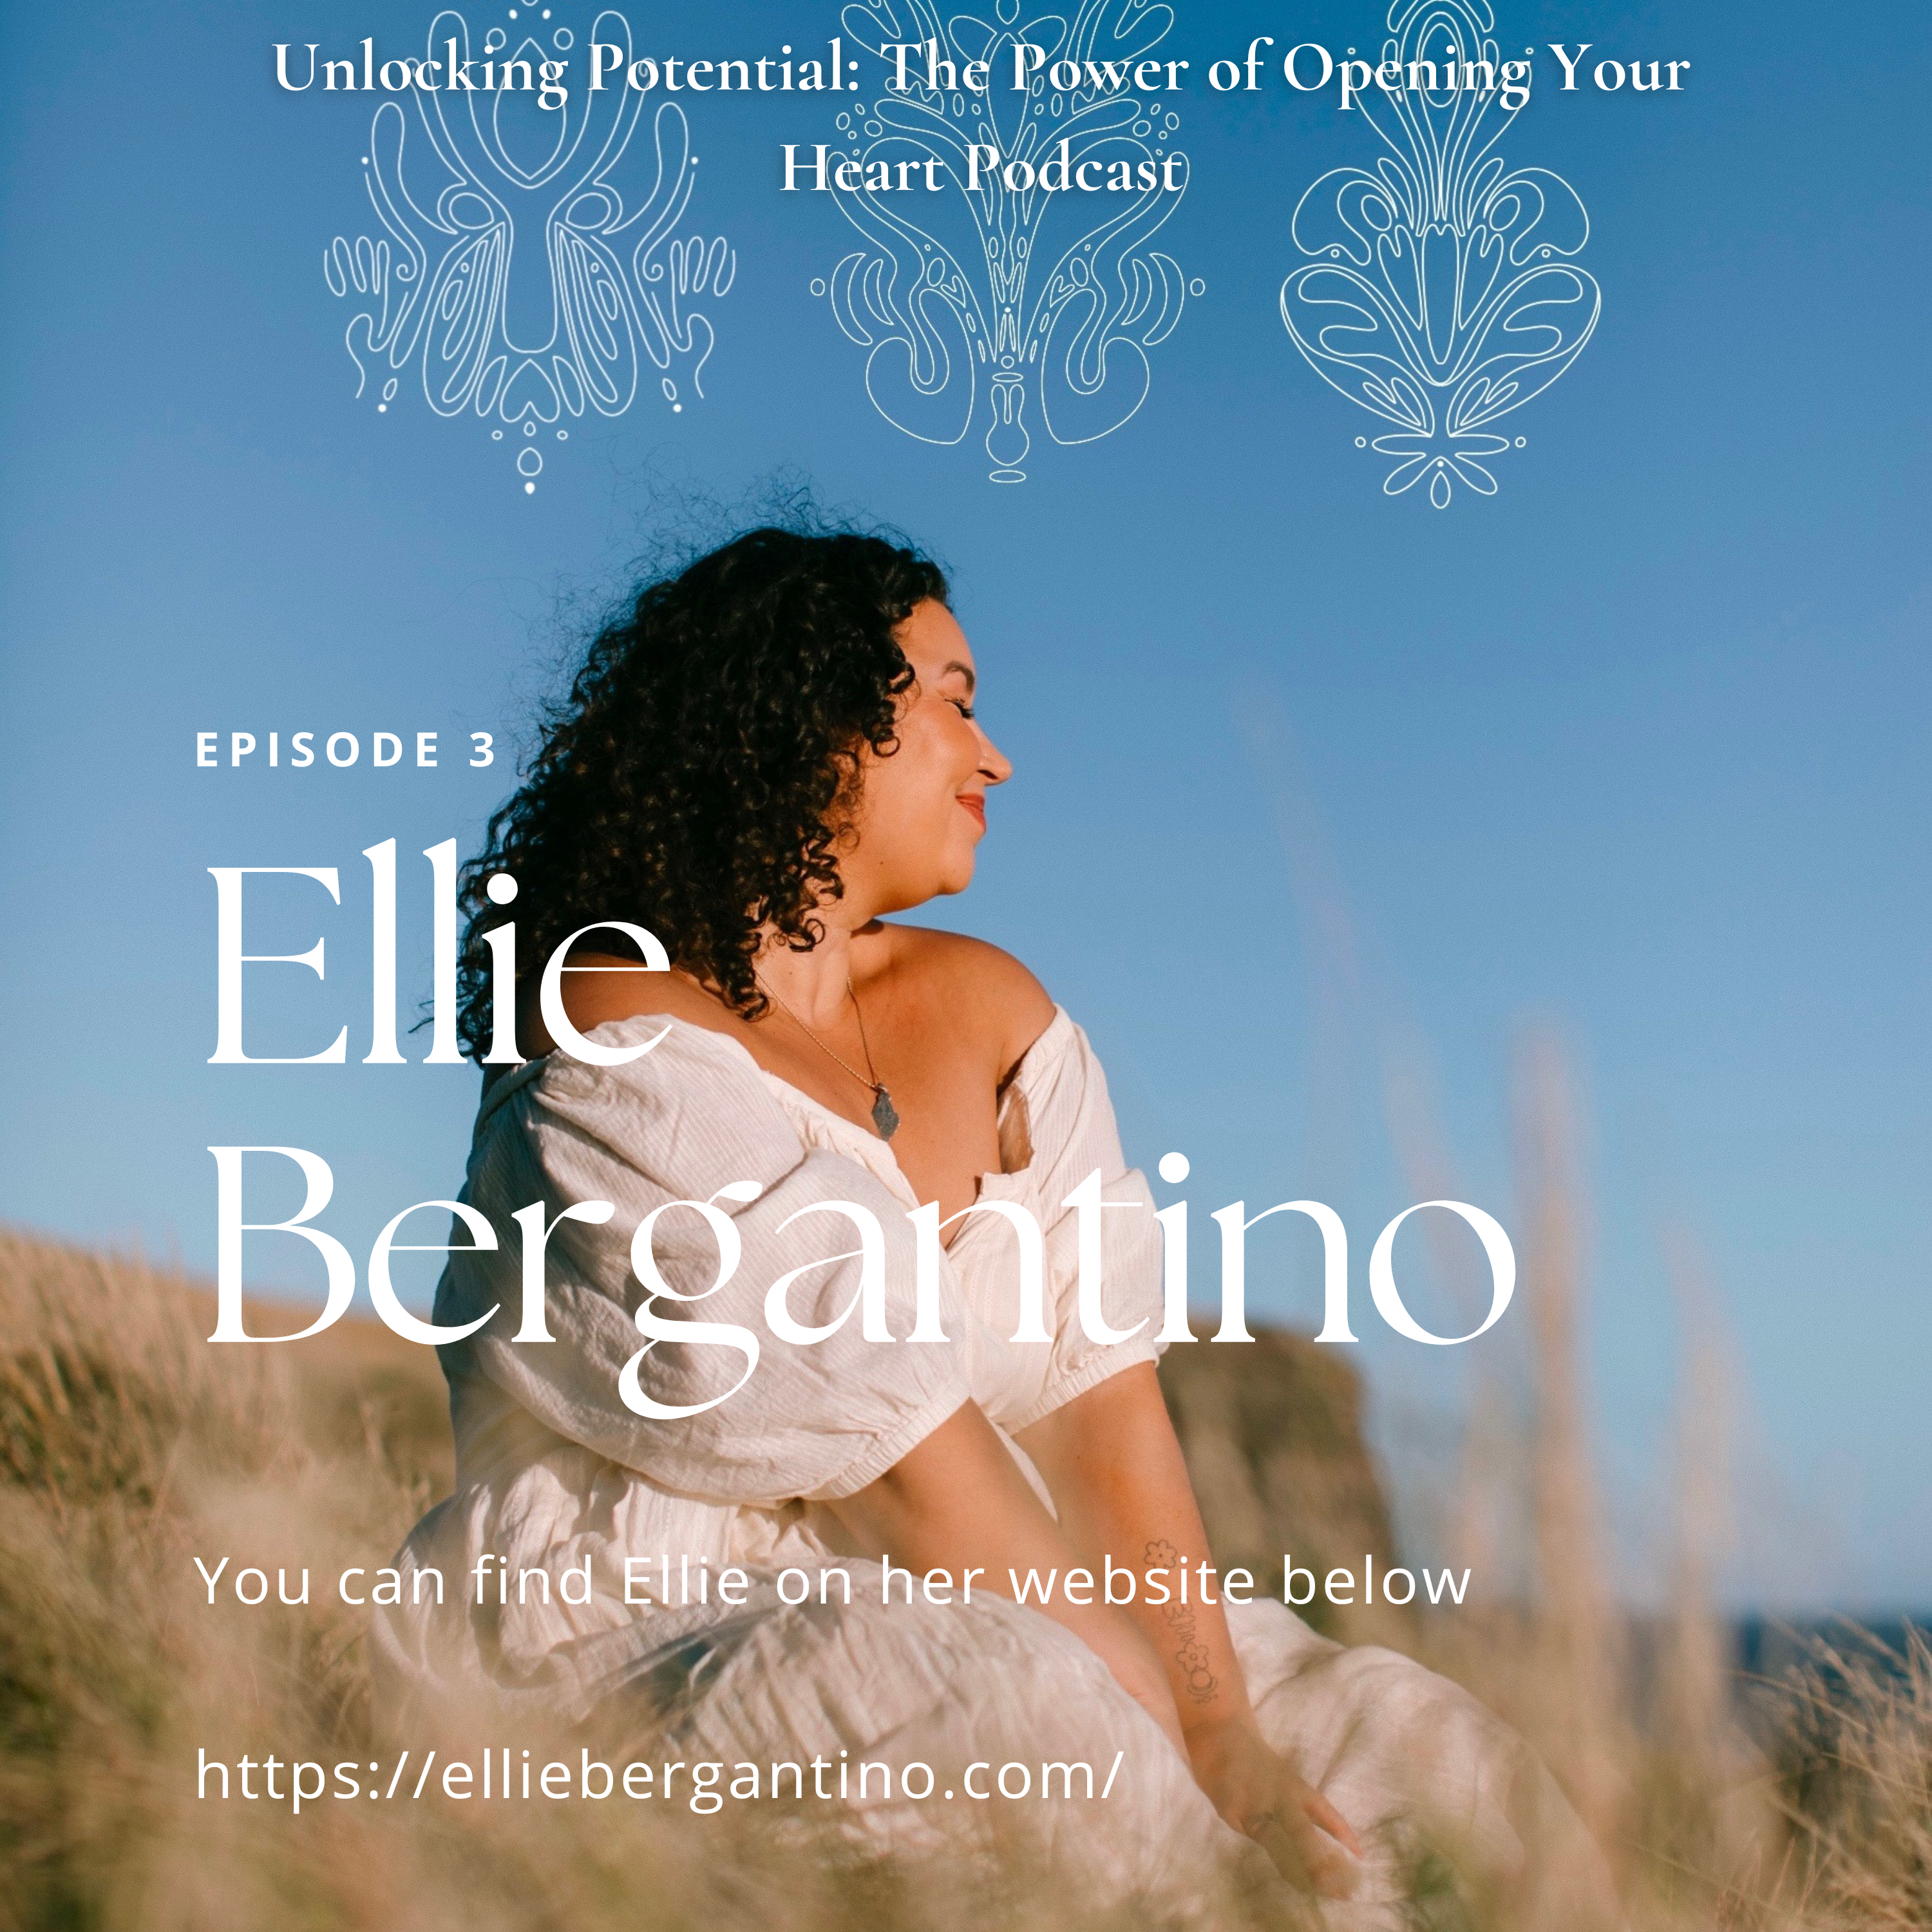 Podcast with Ellie Bergantino